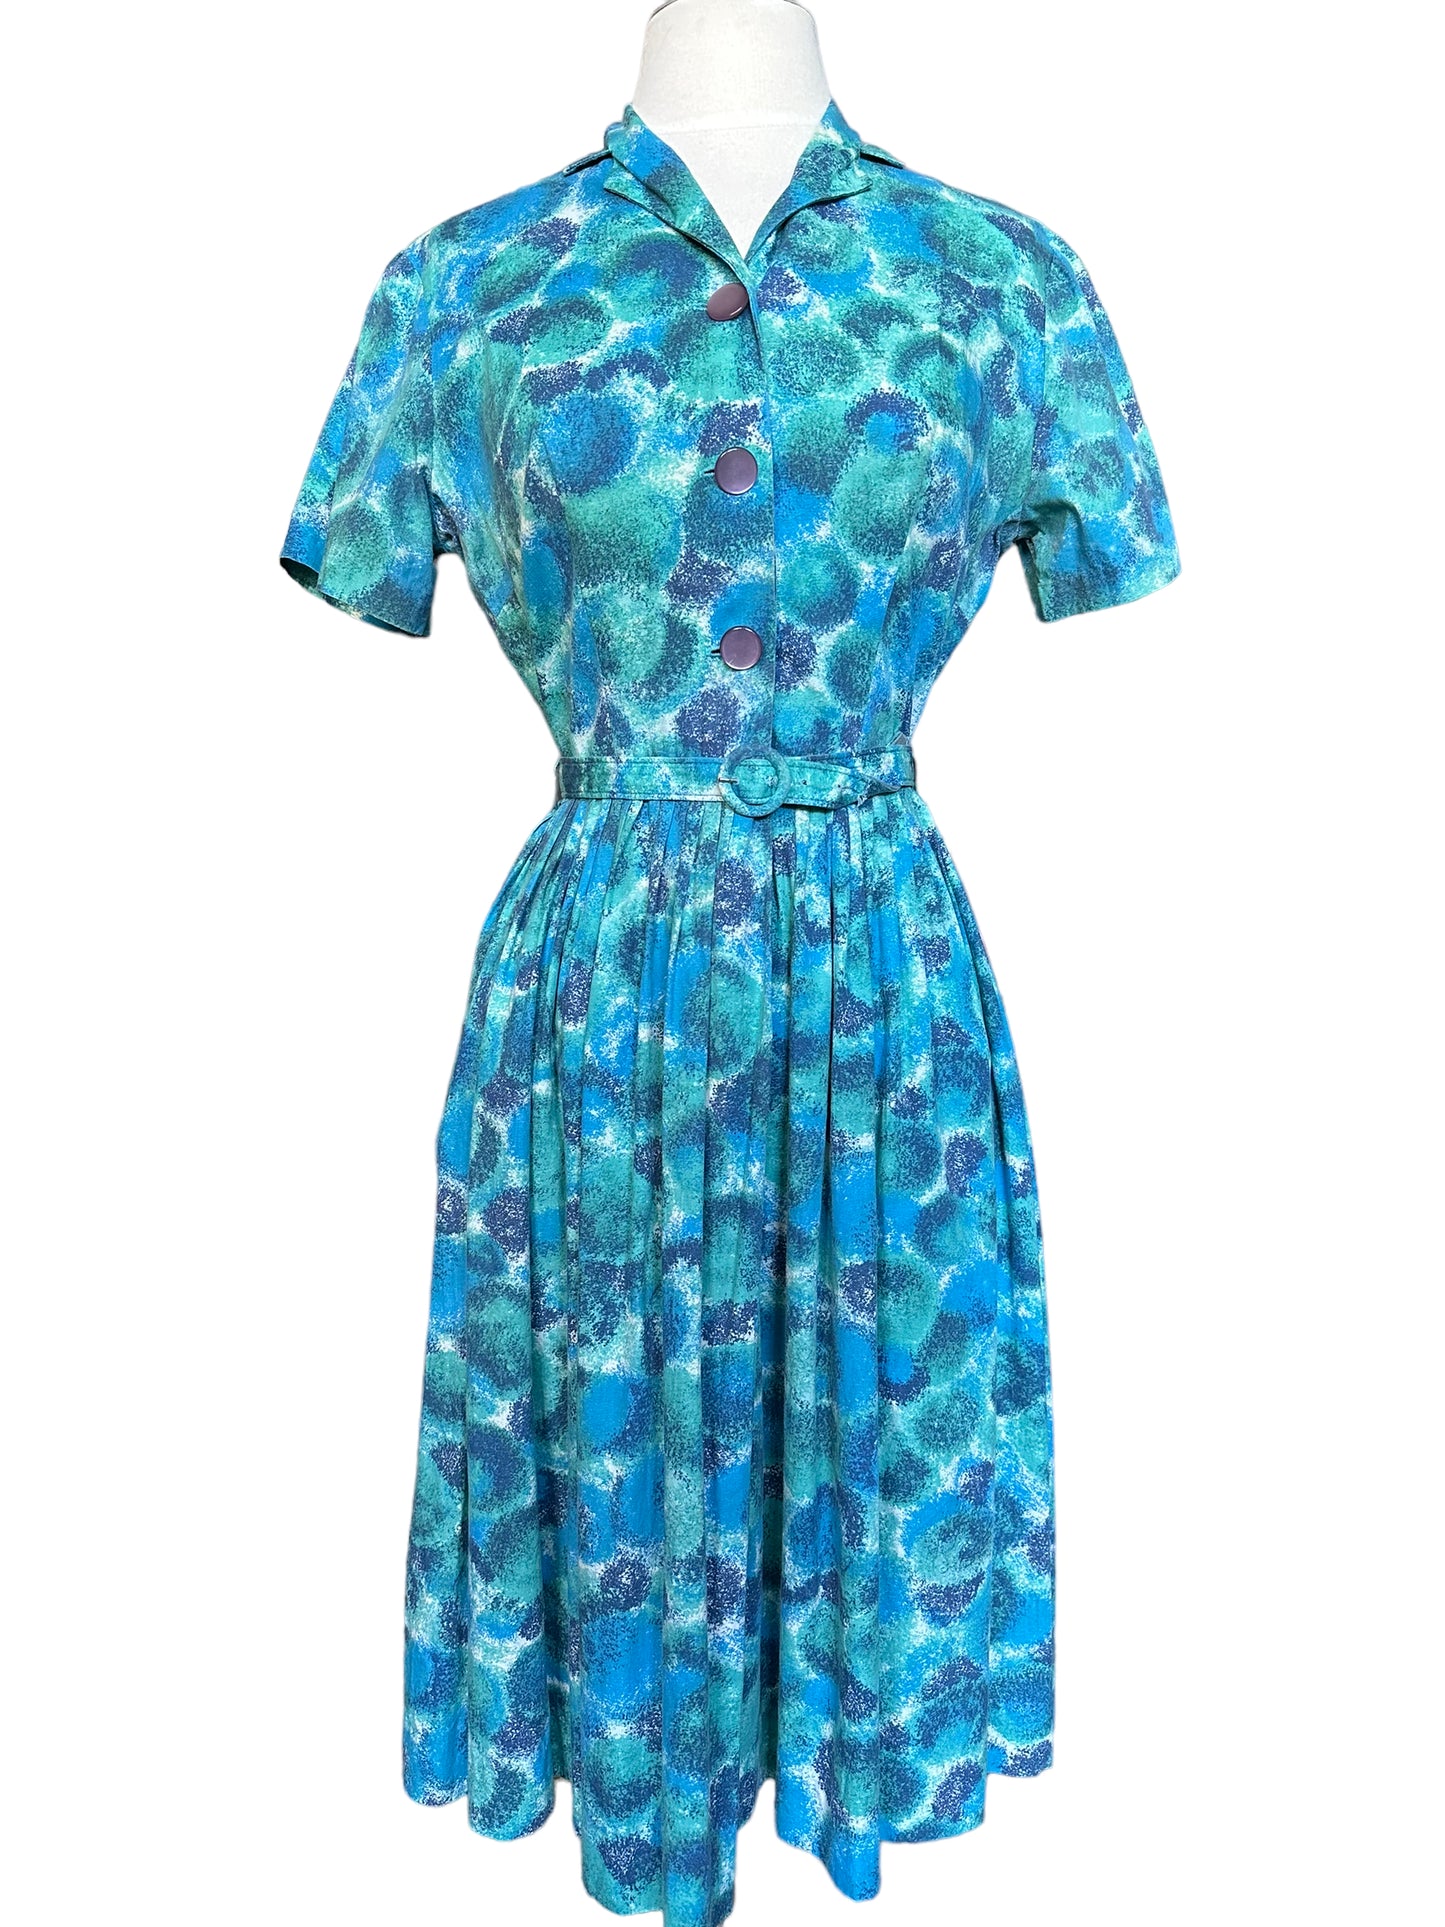 Full front view of Vintage 1950s Button Up Dress With Belt | True Vintage Dresses | Barn Owl Vintage Seattle